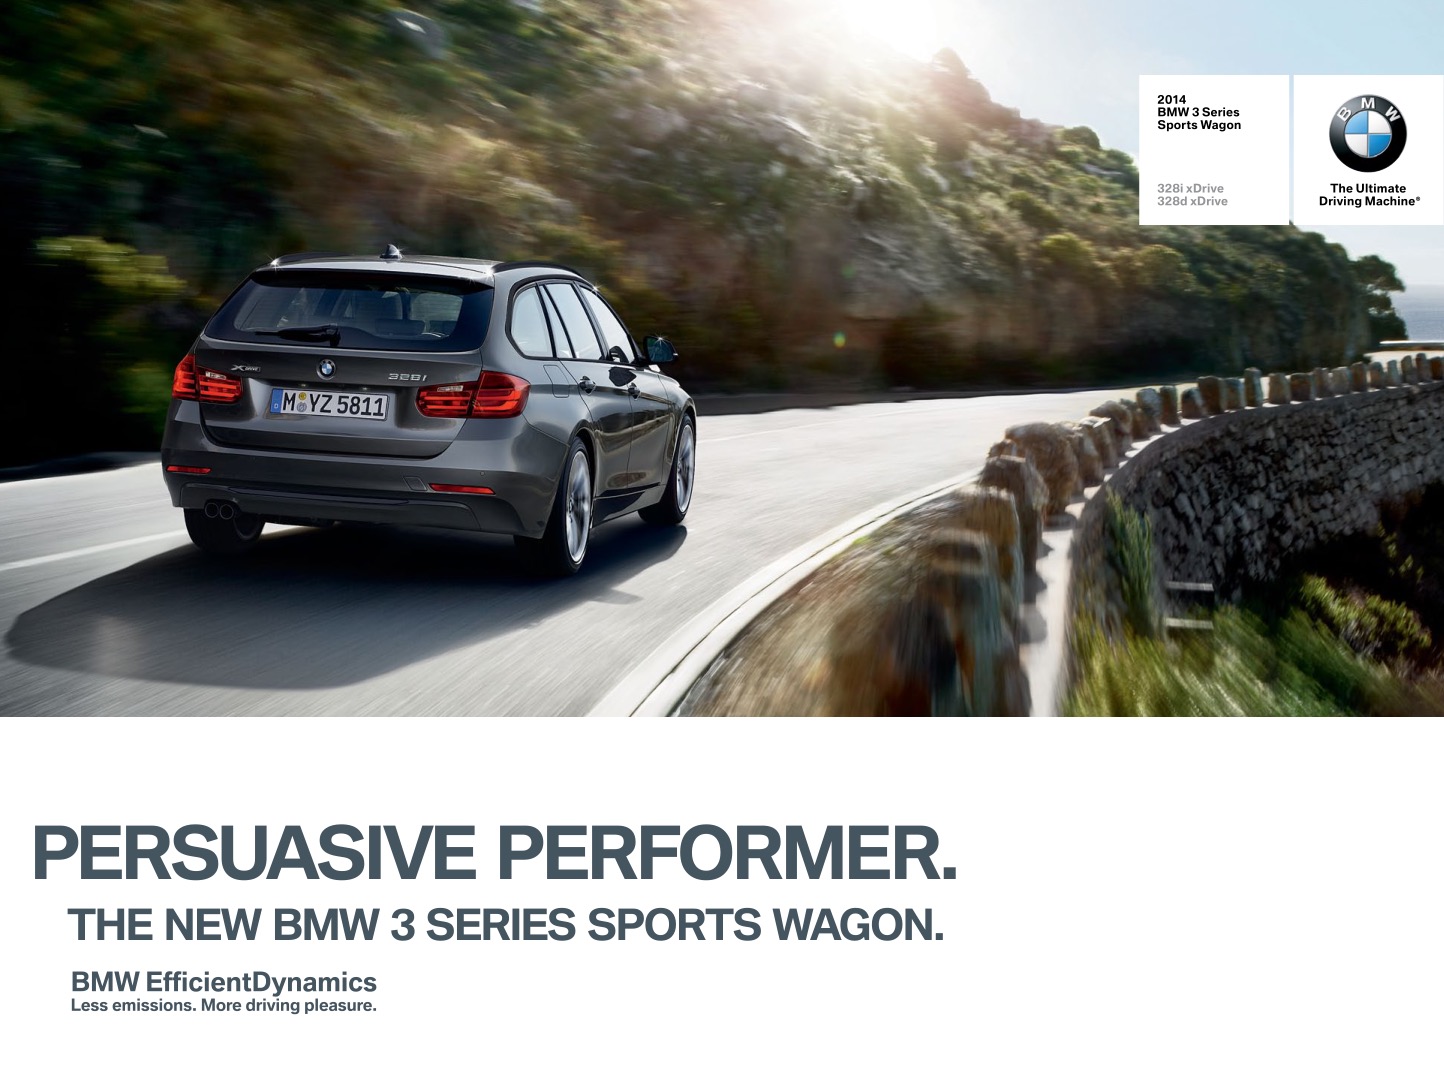 2014 BMW 3-Series Wagon Brochure